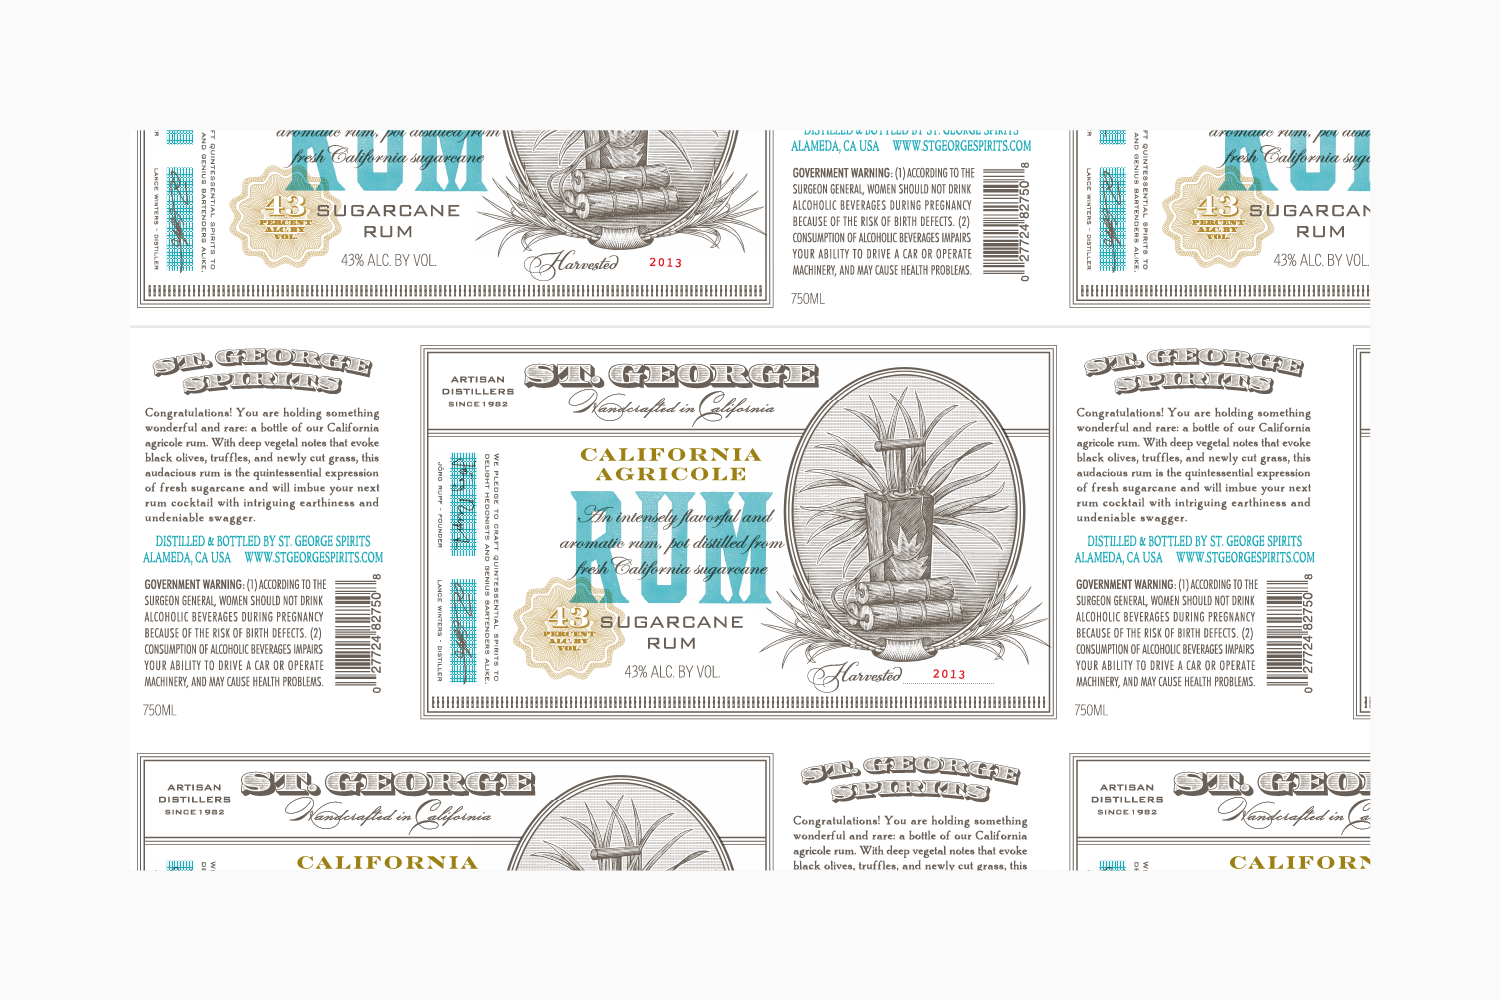 St. George Spirits Rum Labels.